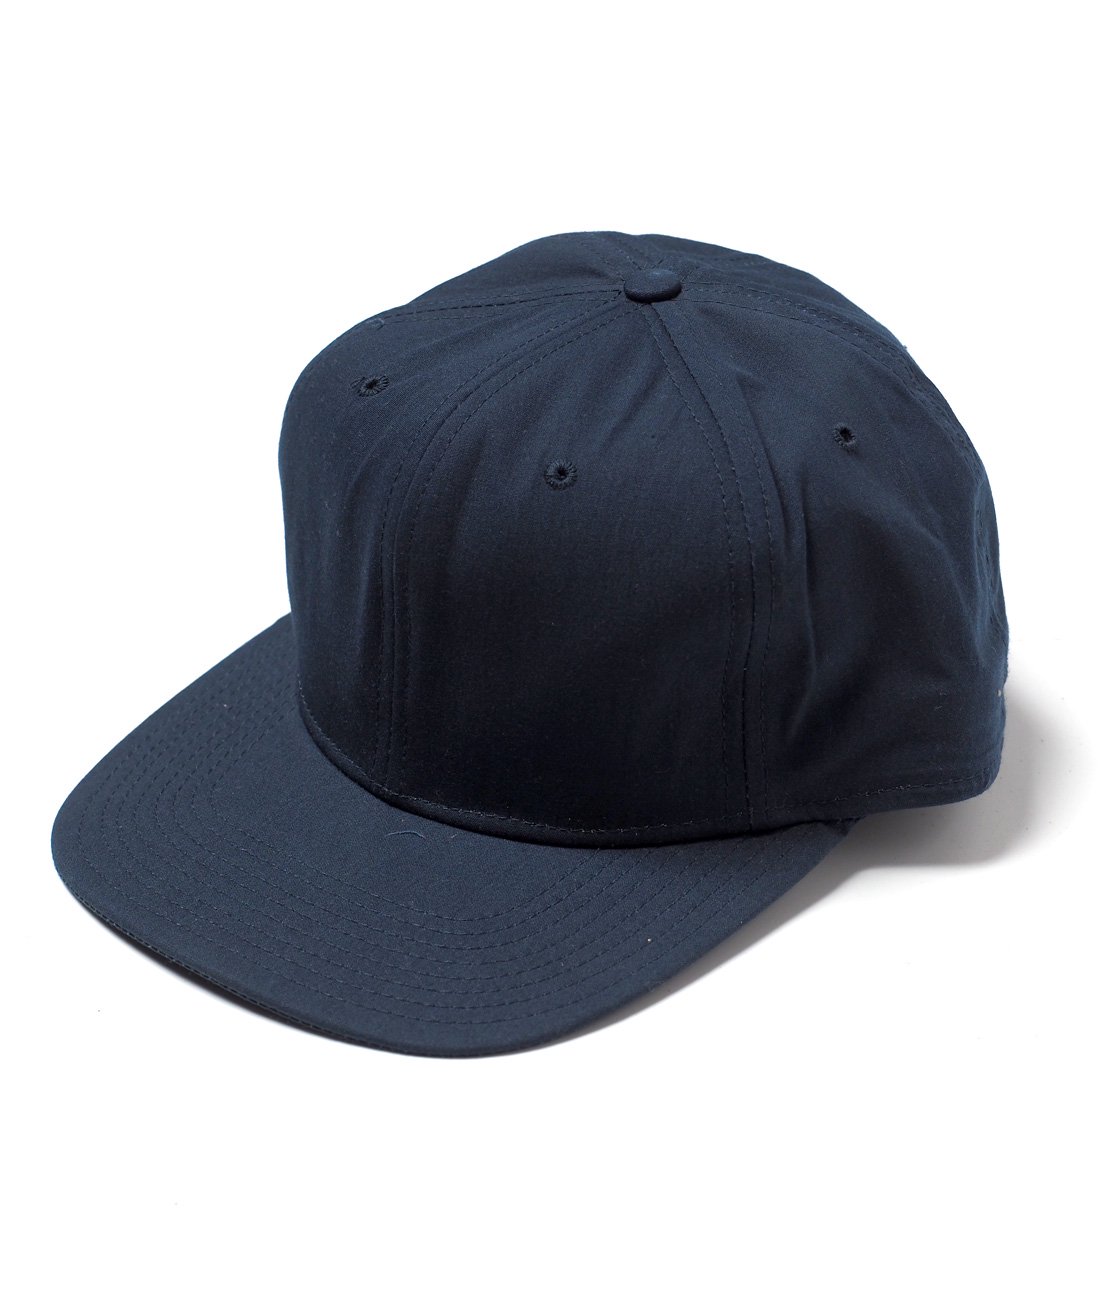 DEAD STOCK】80s US NAVY UTILITY CAP - NAVY アメリカ海軍 帽子